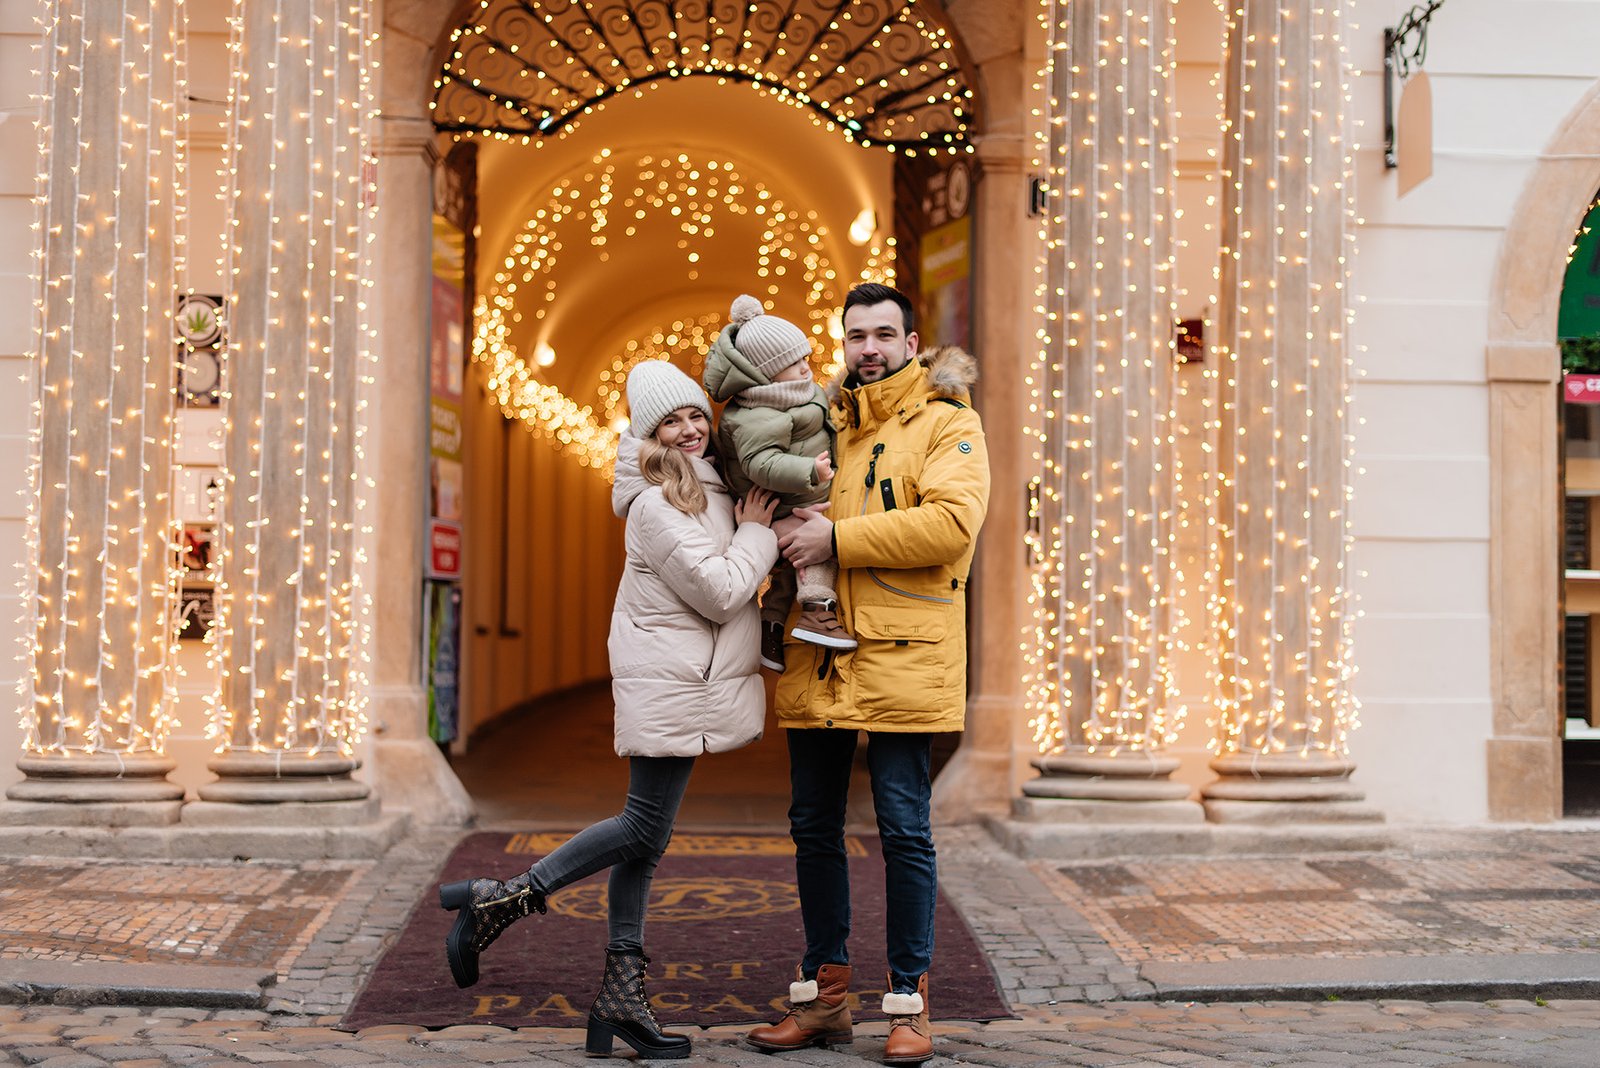 Family Christmas Photoshoot in Prague's Market